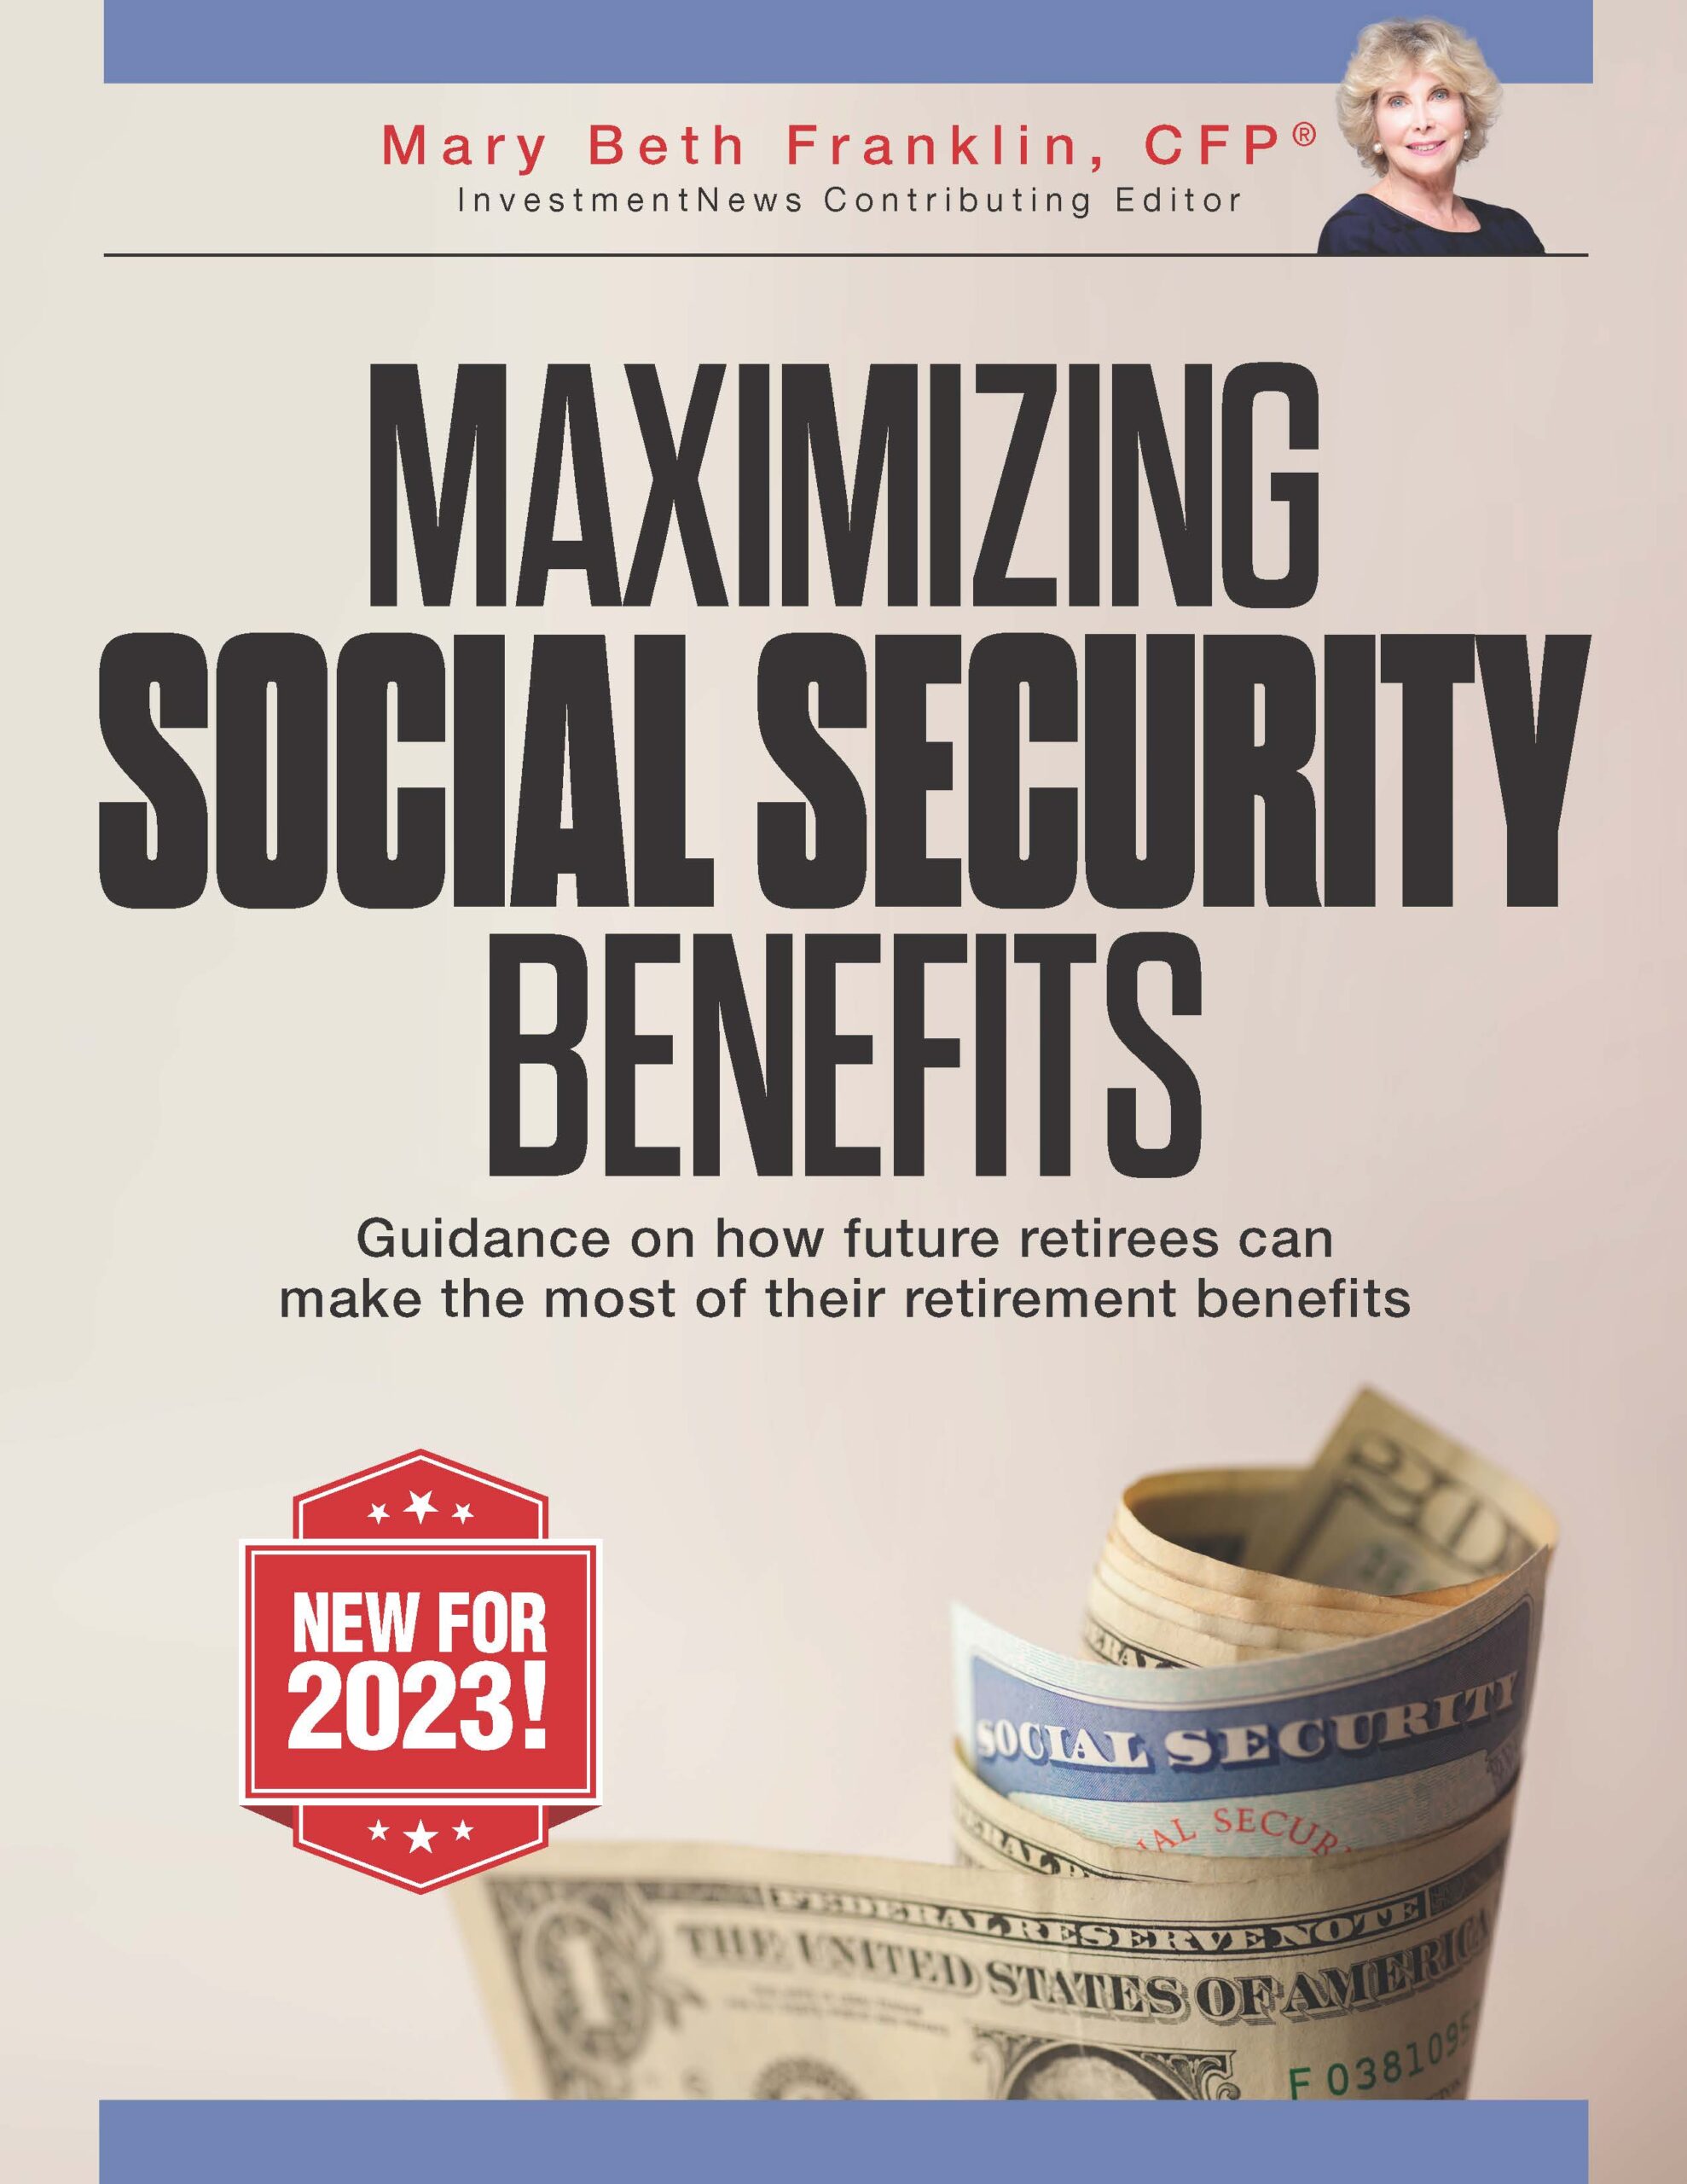 eBook on Social Security Estimated Benefits